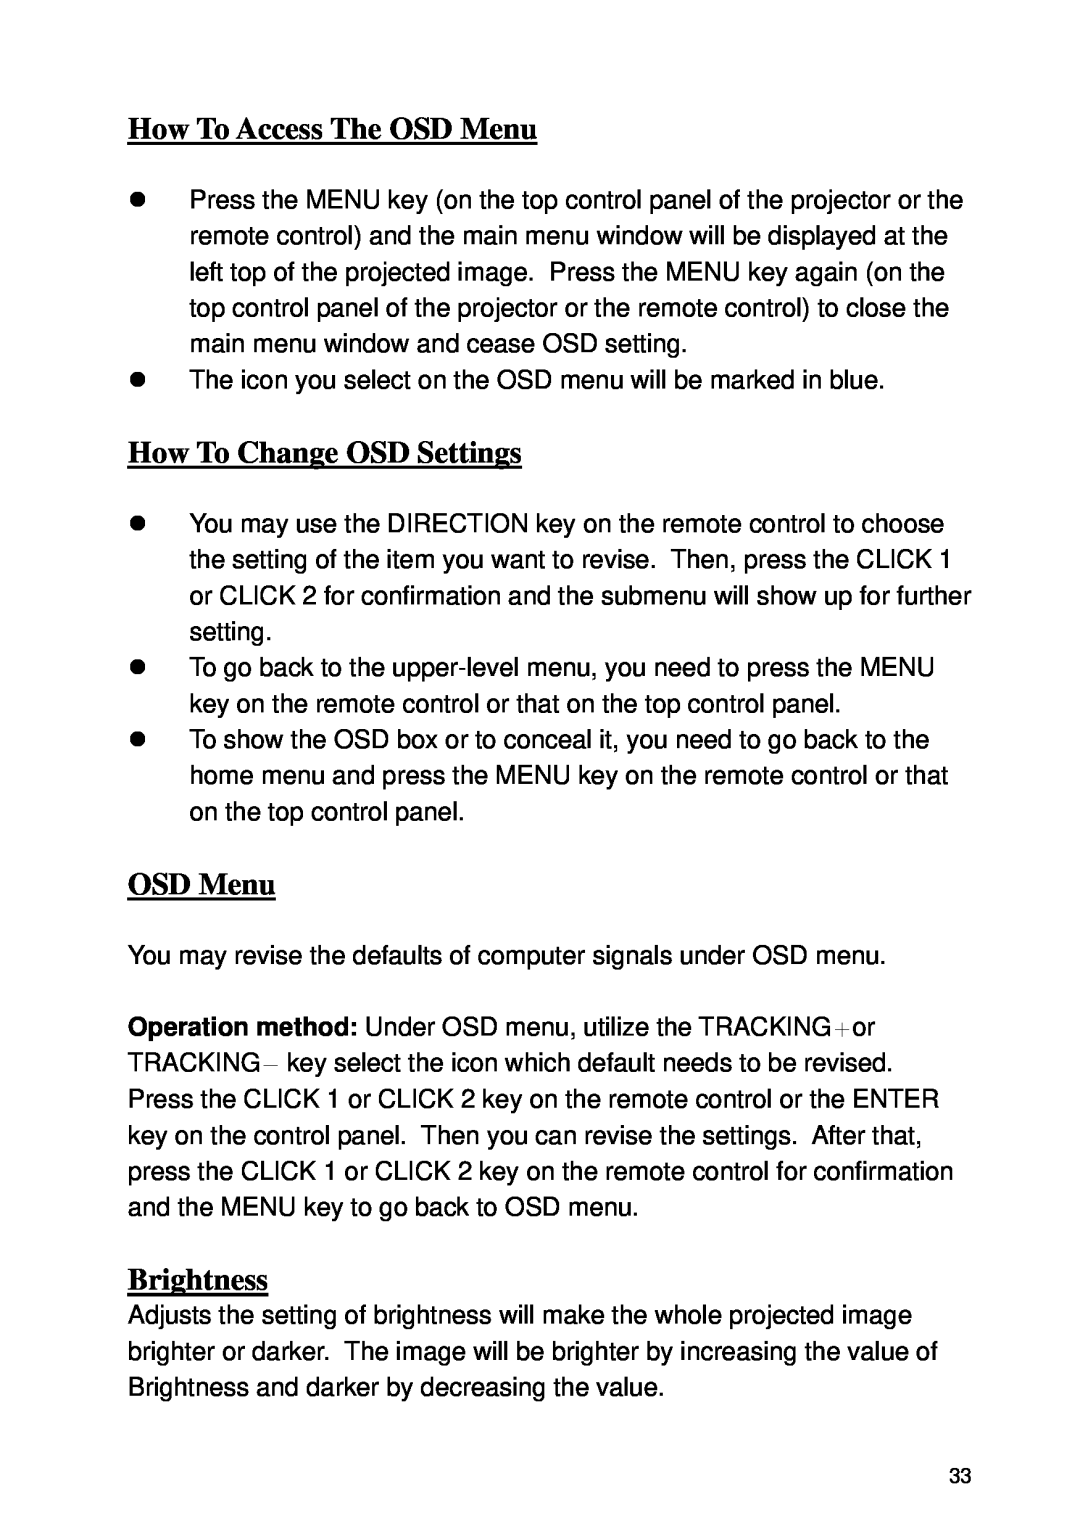 Microtek CX4 manual How To Access The OSD Menu, How To Change OSD Settings, Brightness 